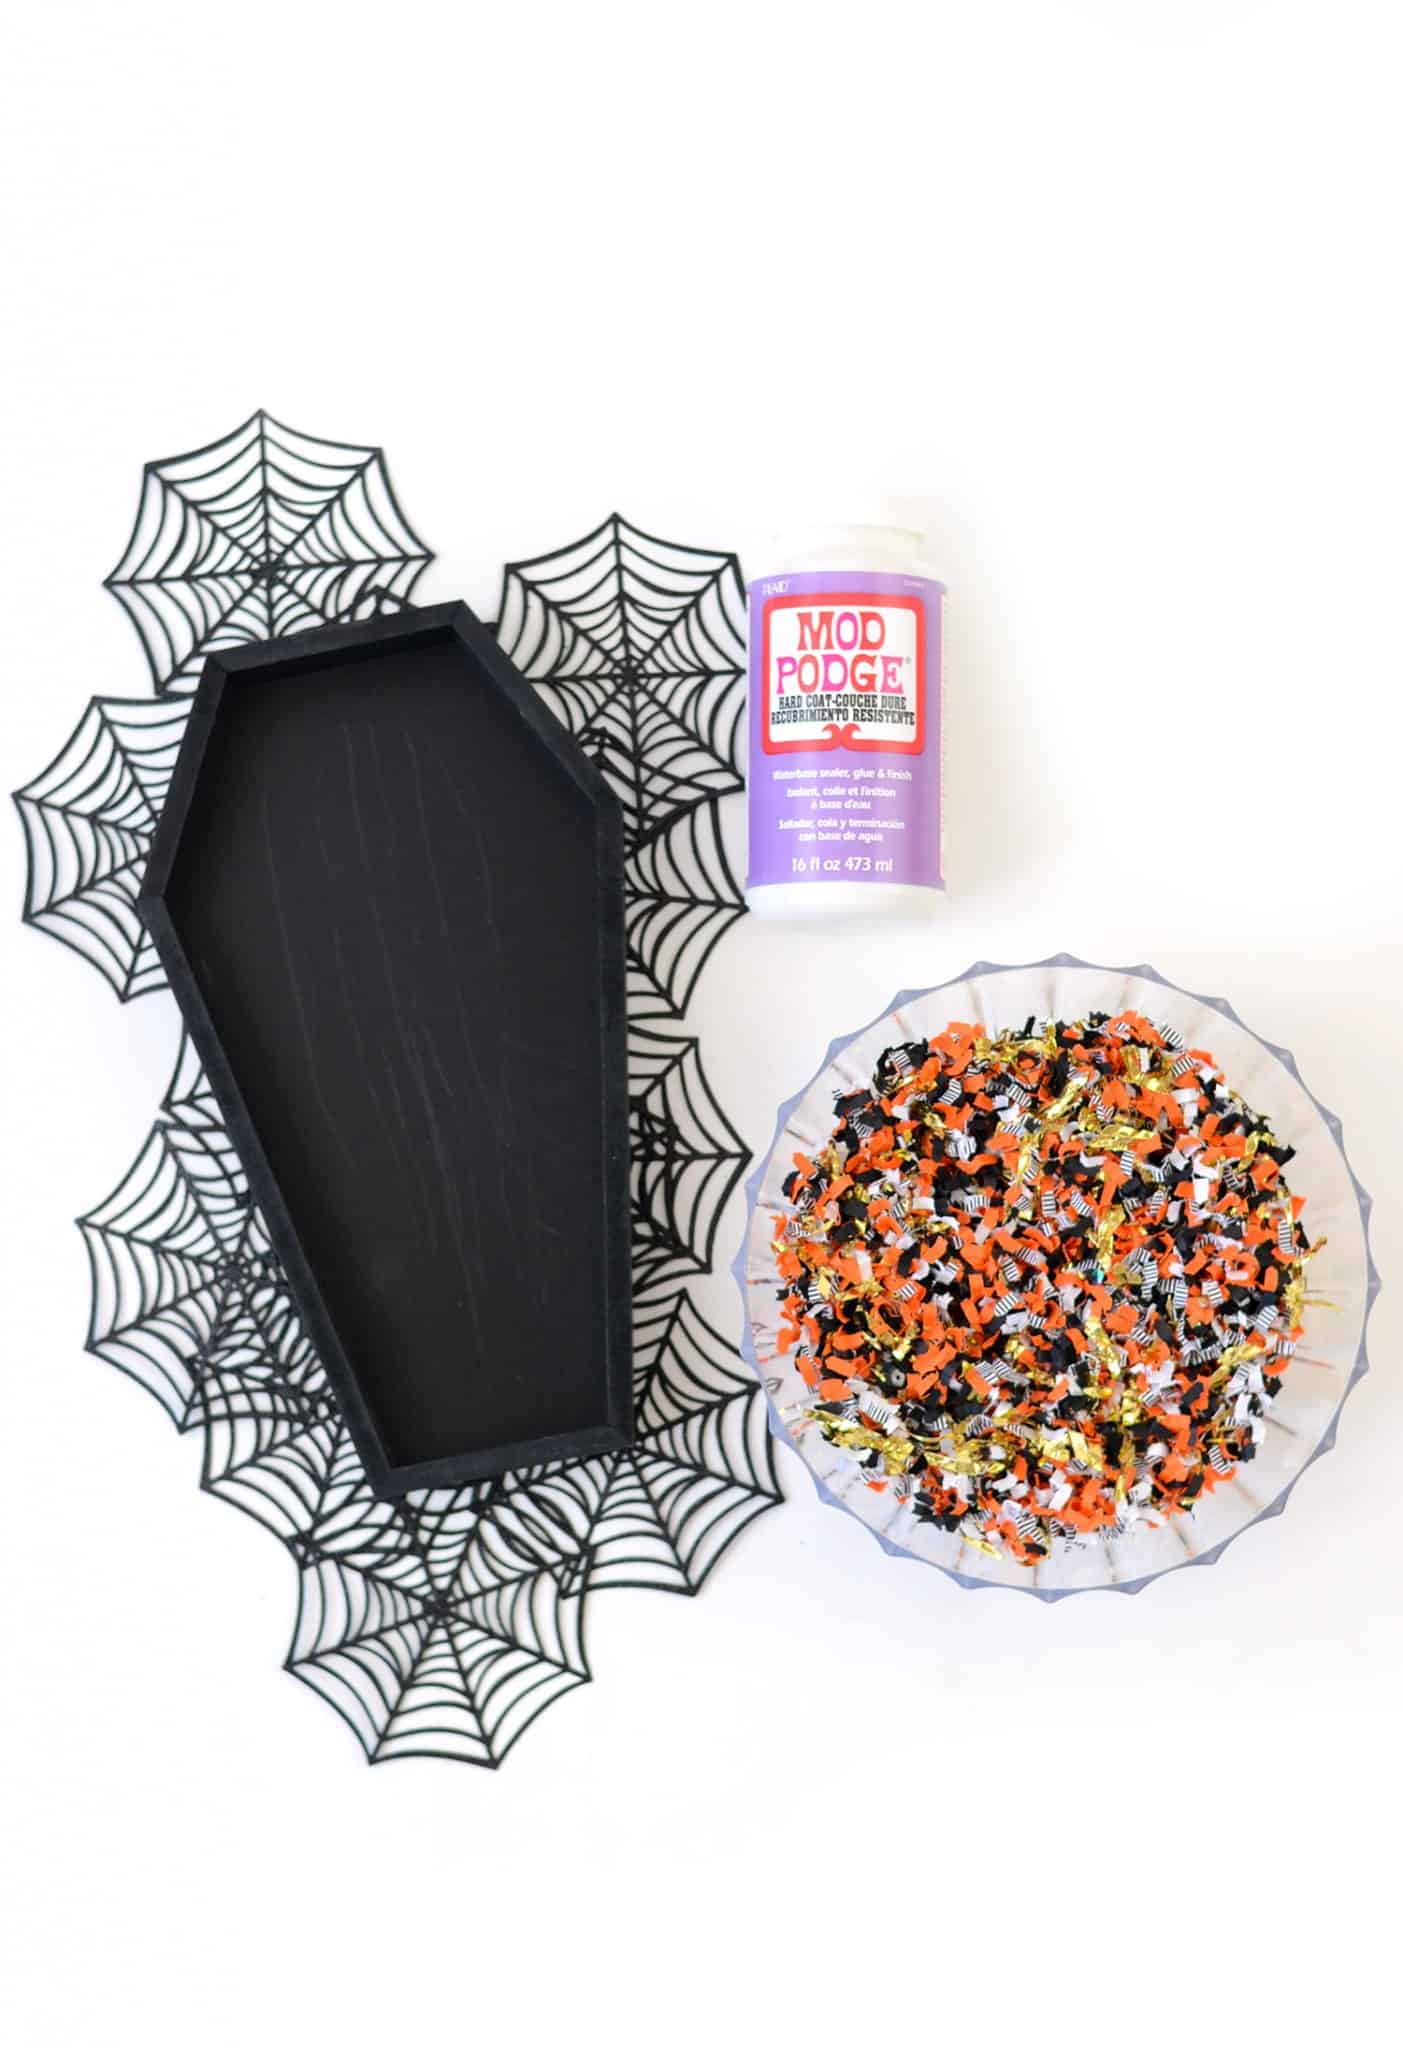 Black wood coffin tray, Mod Podge, and Halloween confetti